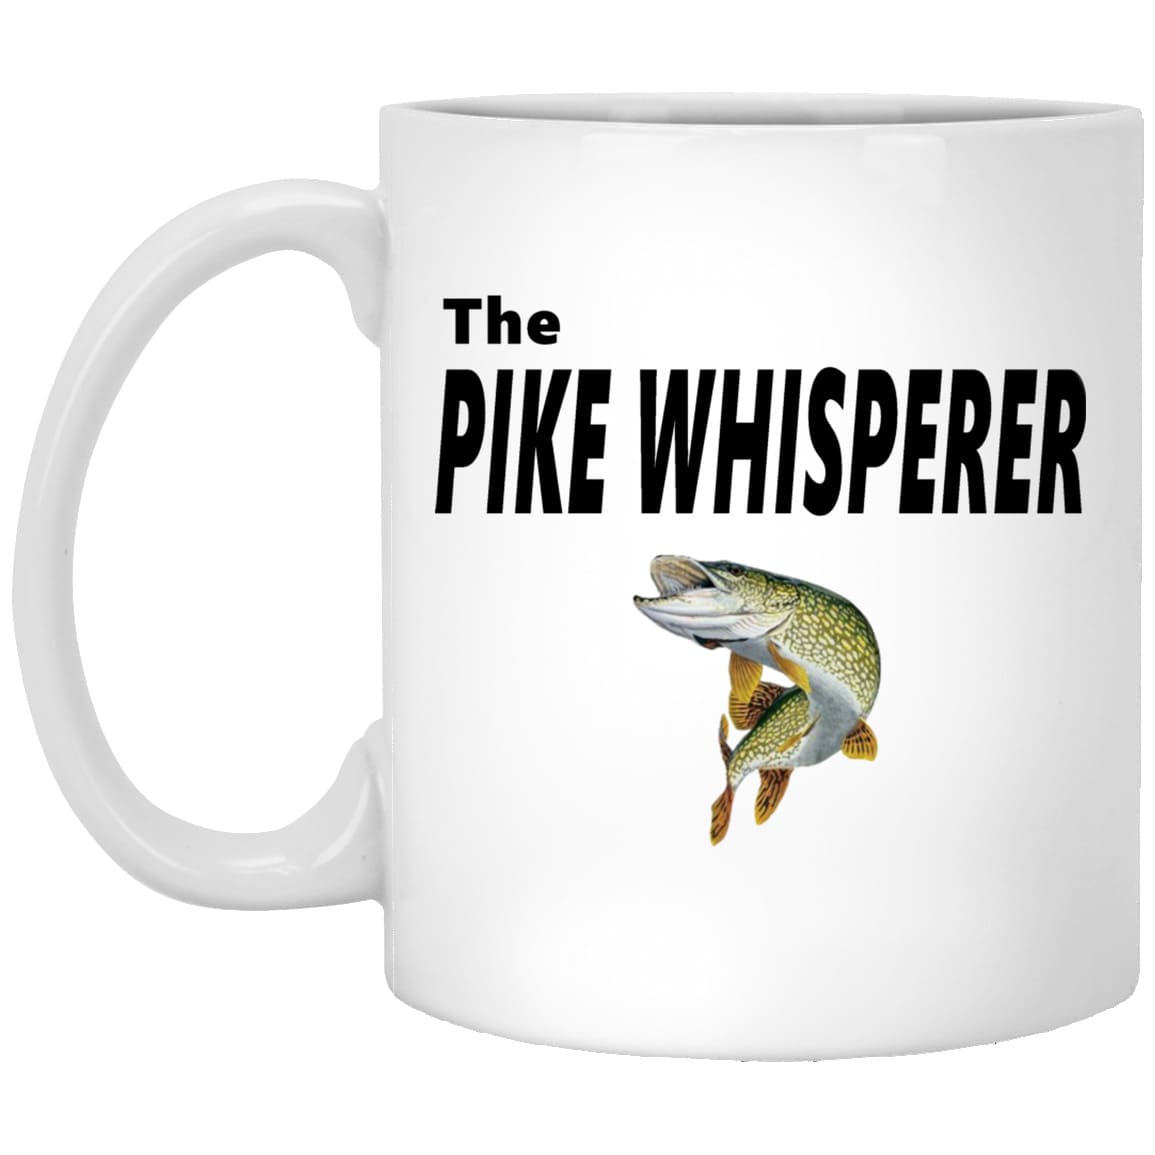 The Pike Whisperer White Mug